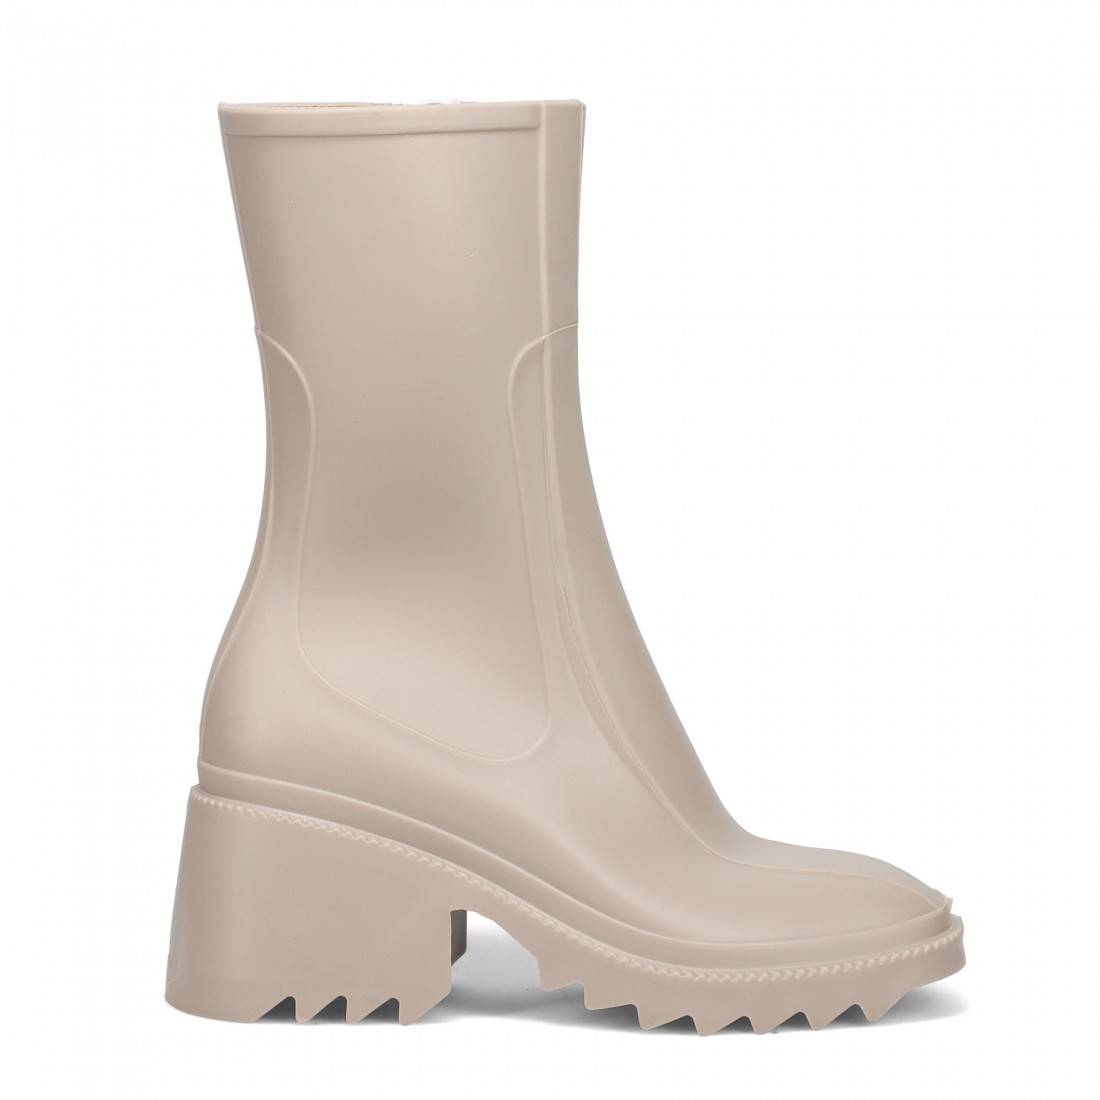 Spazio Corridoni rain bootie in beige rubber with medium heel